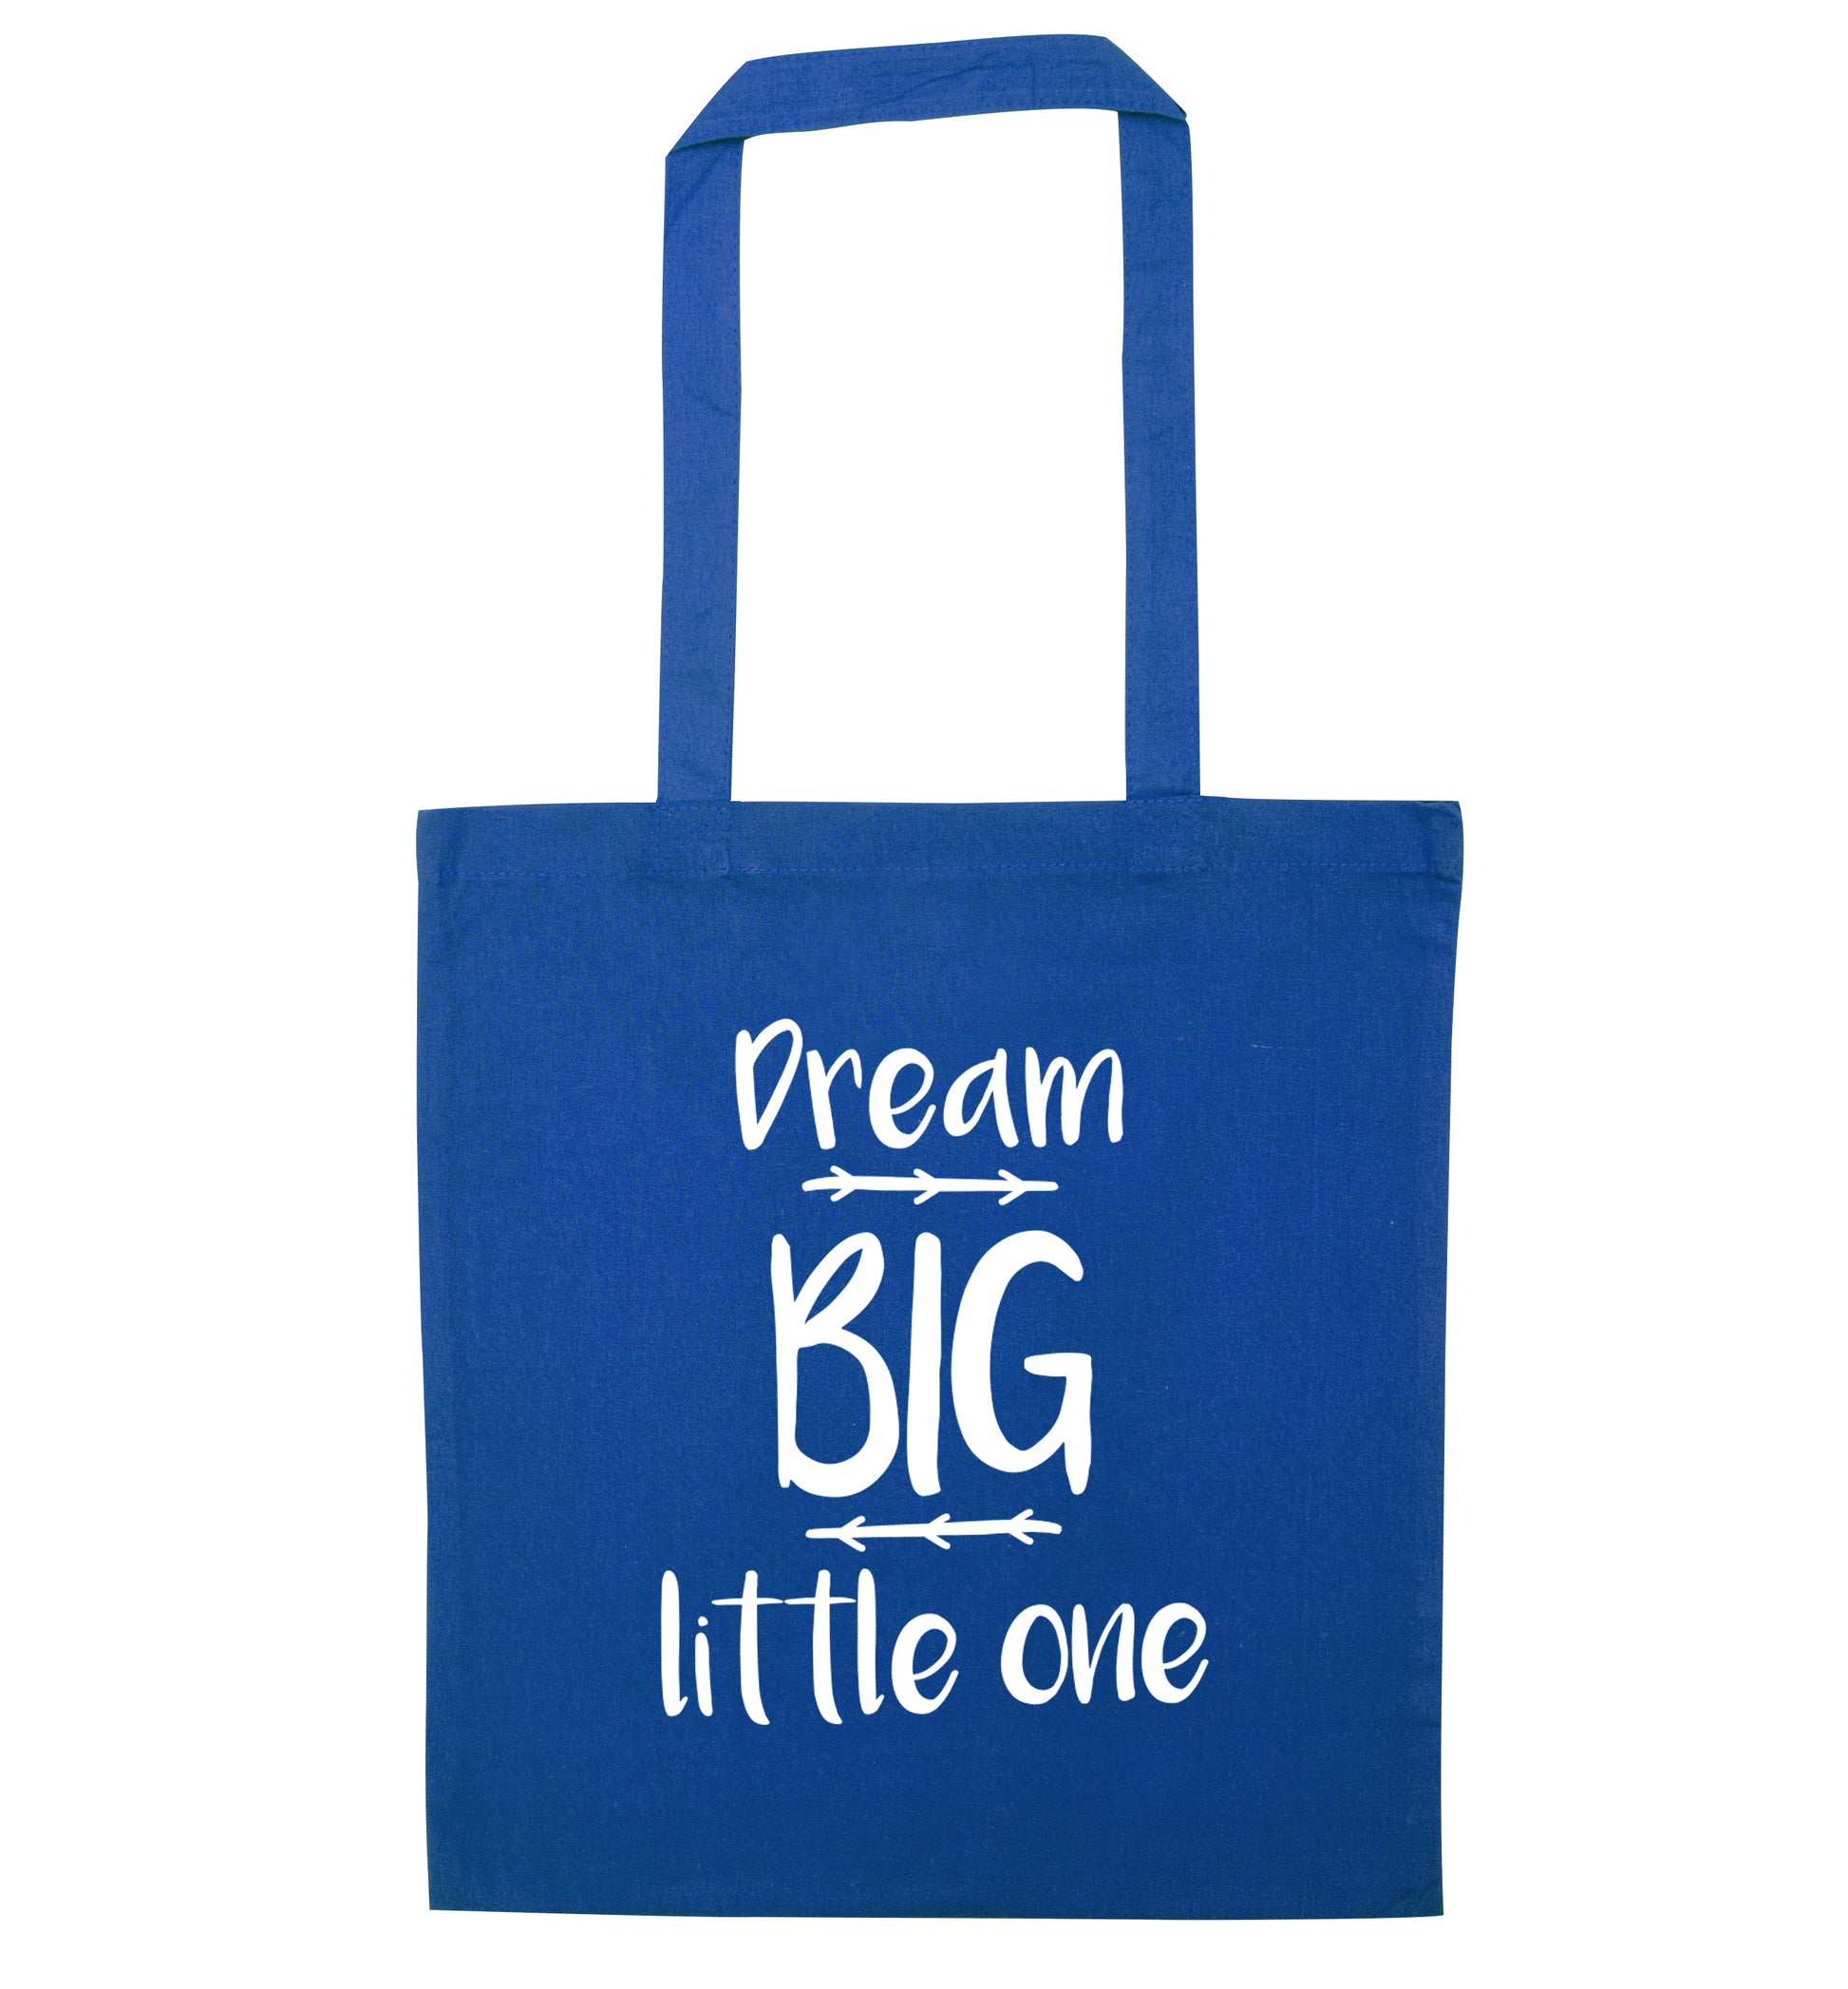 Dream big little one blue tote bag